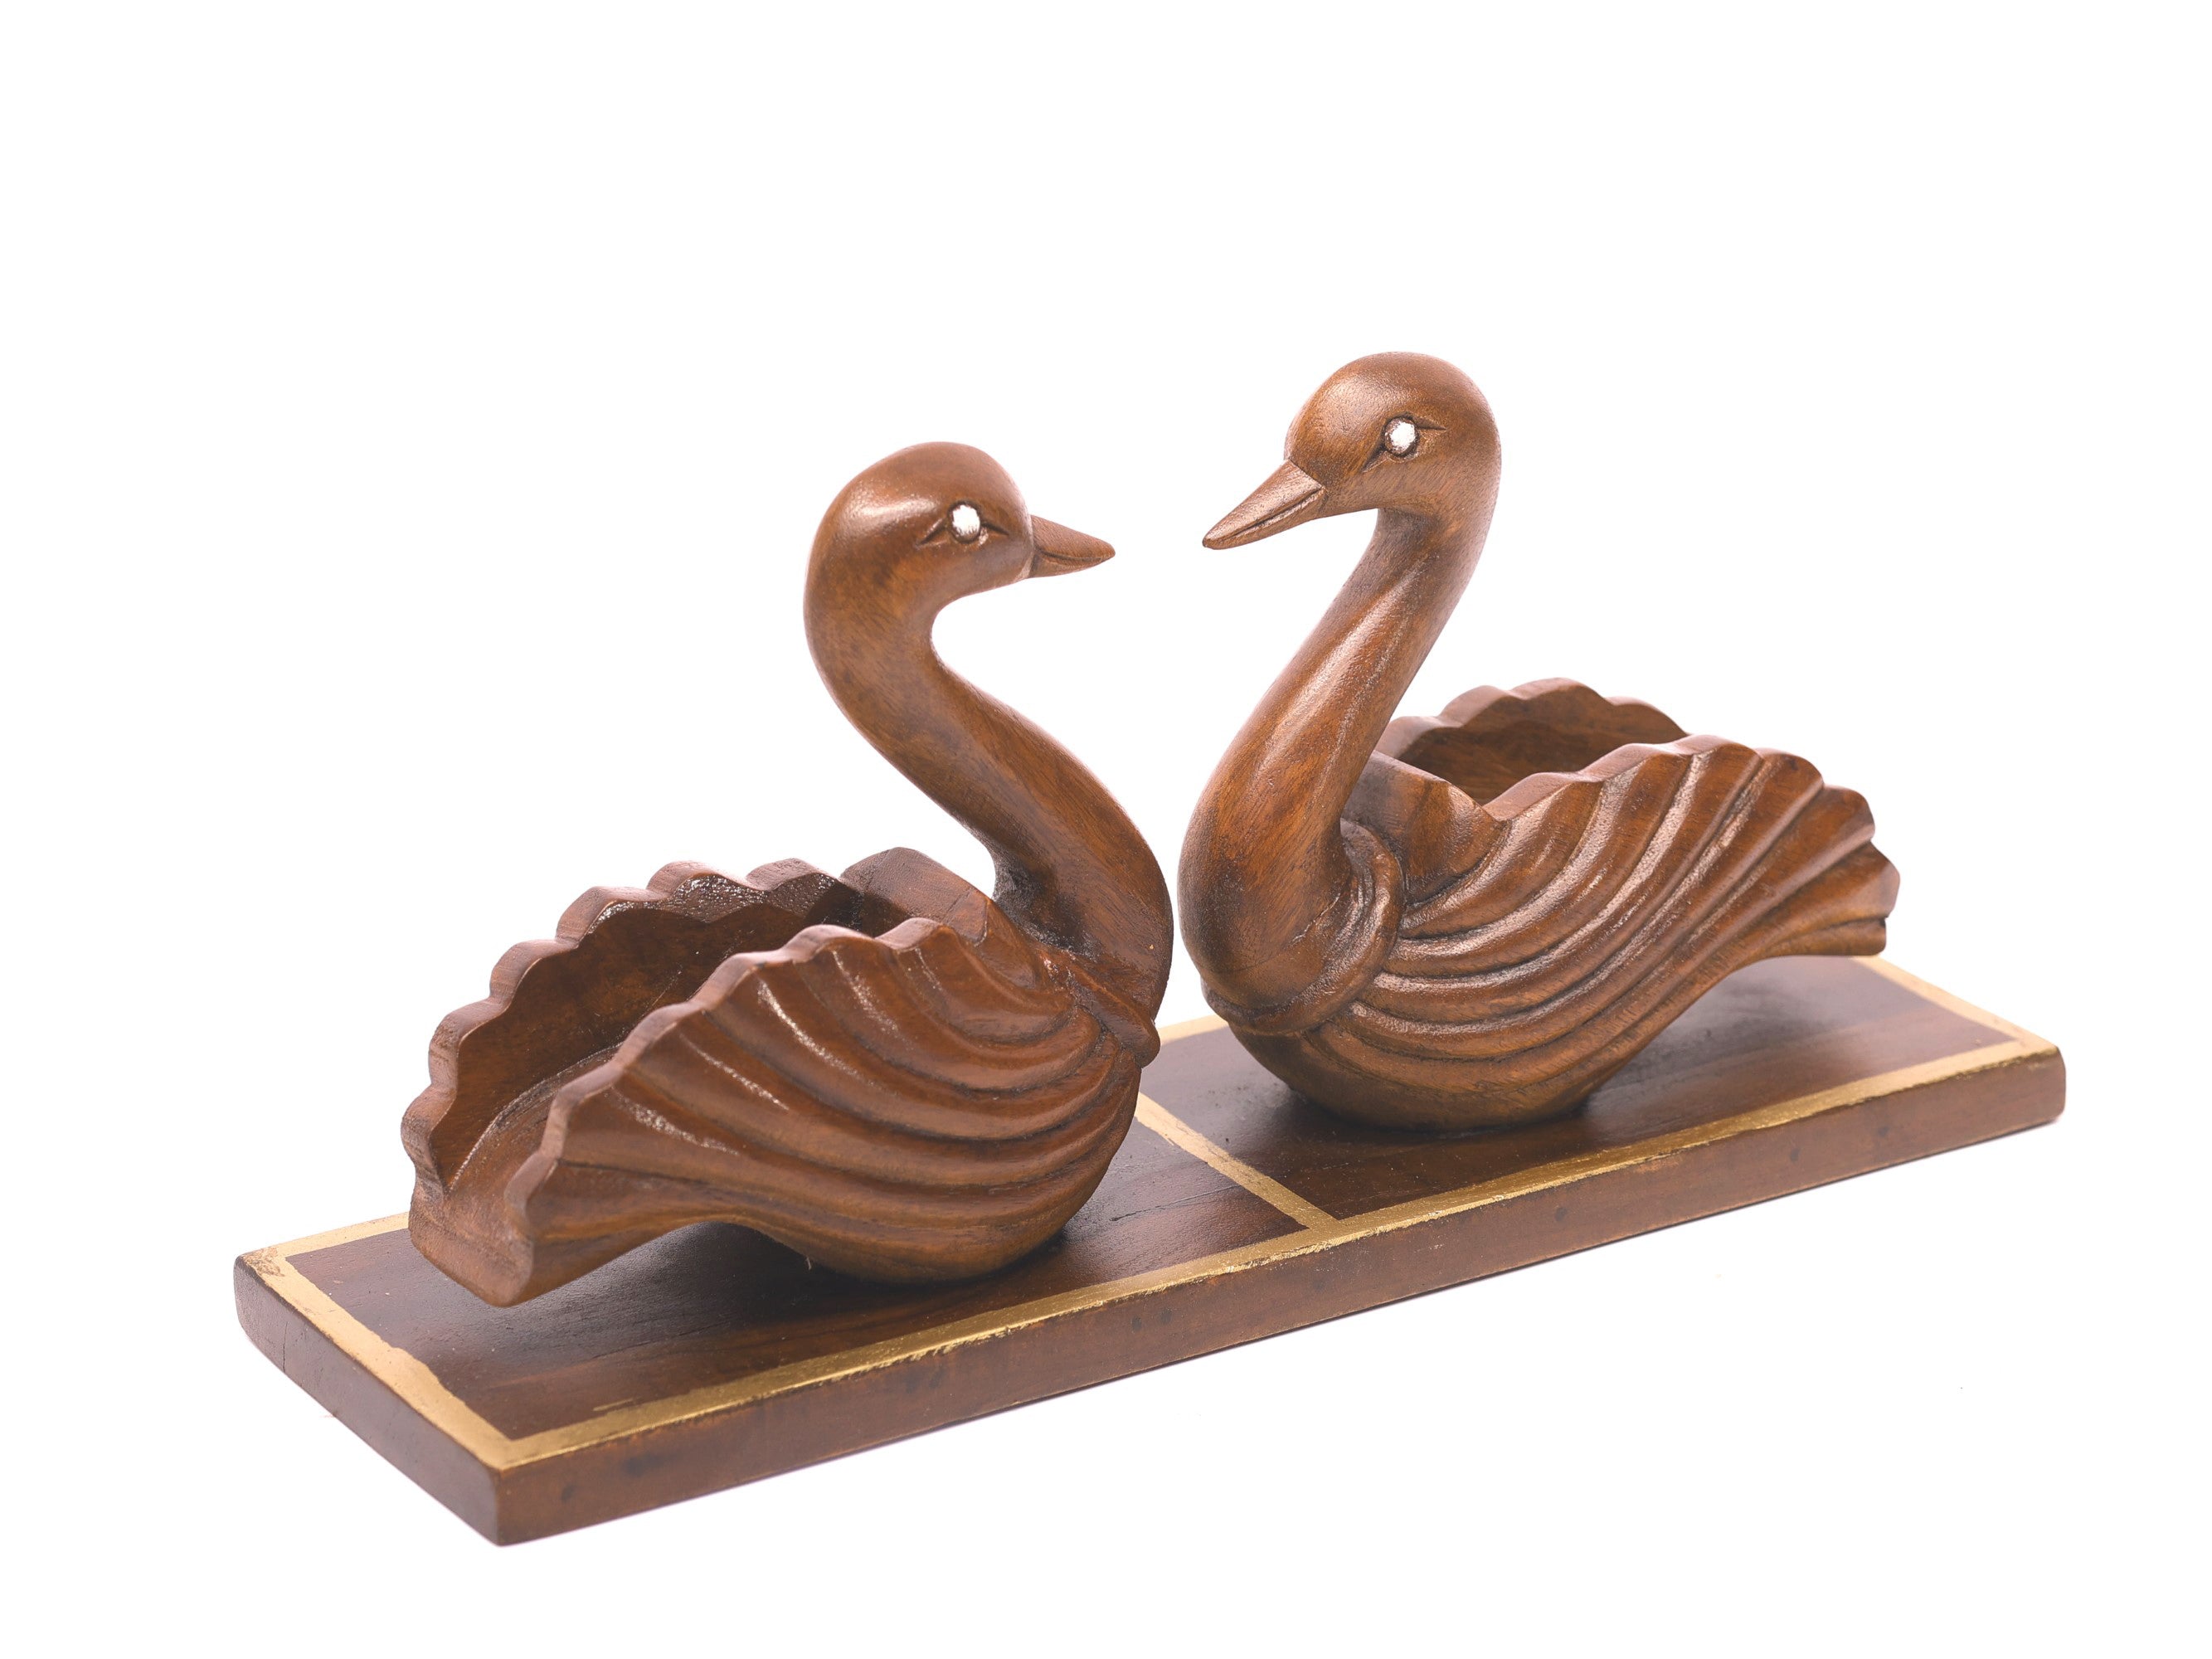 A Pair of Wooden Swans Showpiece Animal Figurine